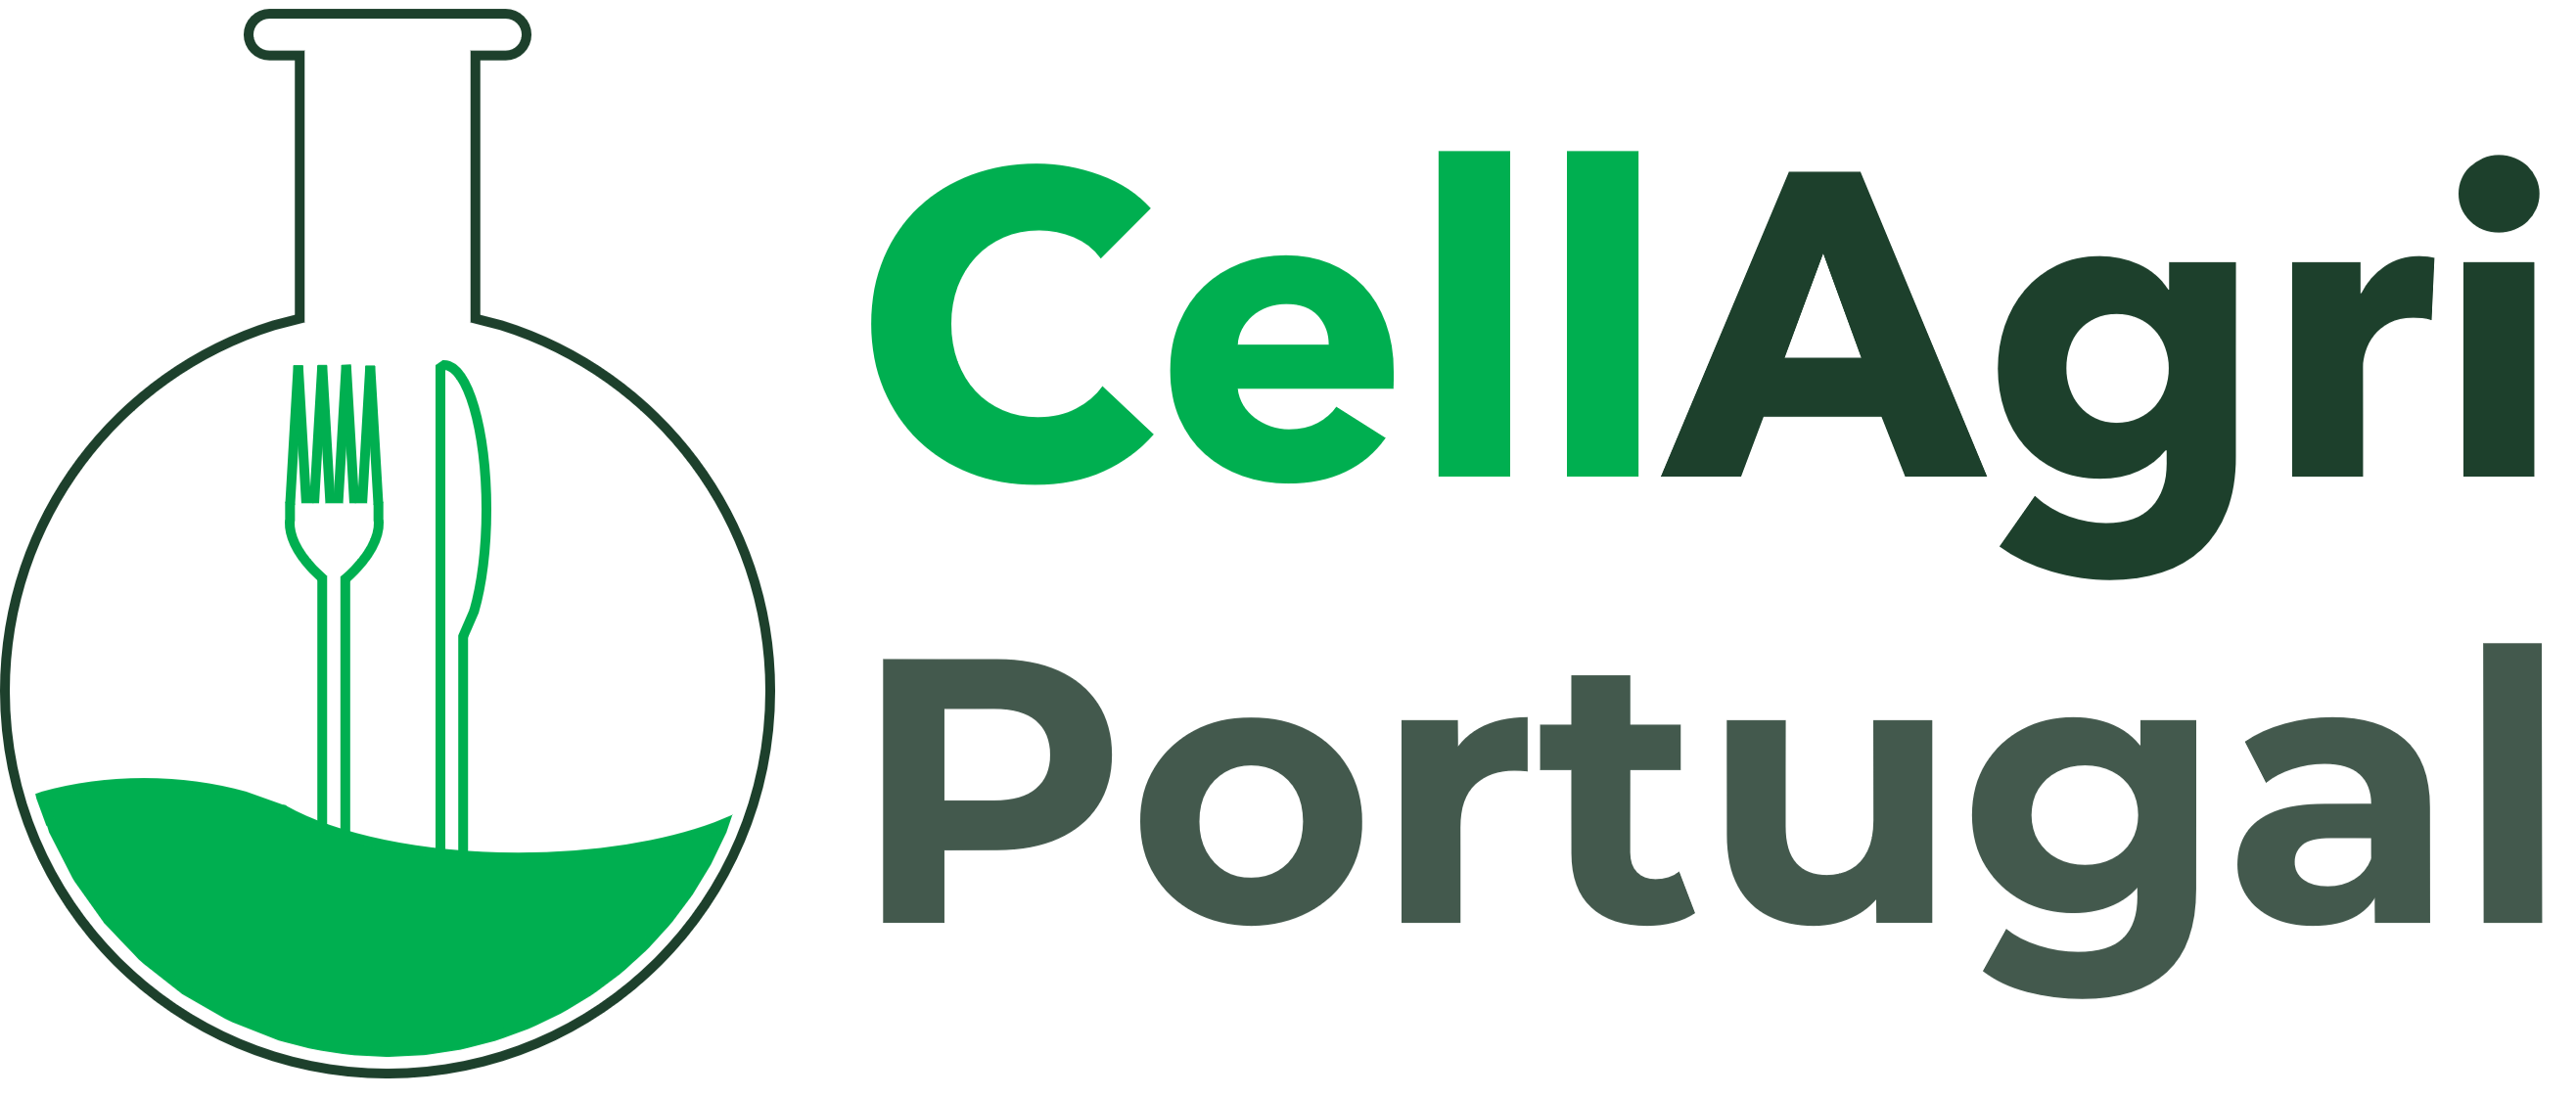 CellAgri Portugal logo